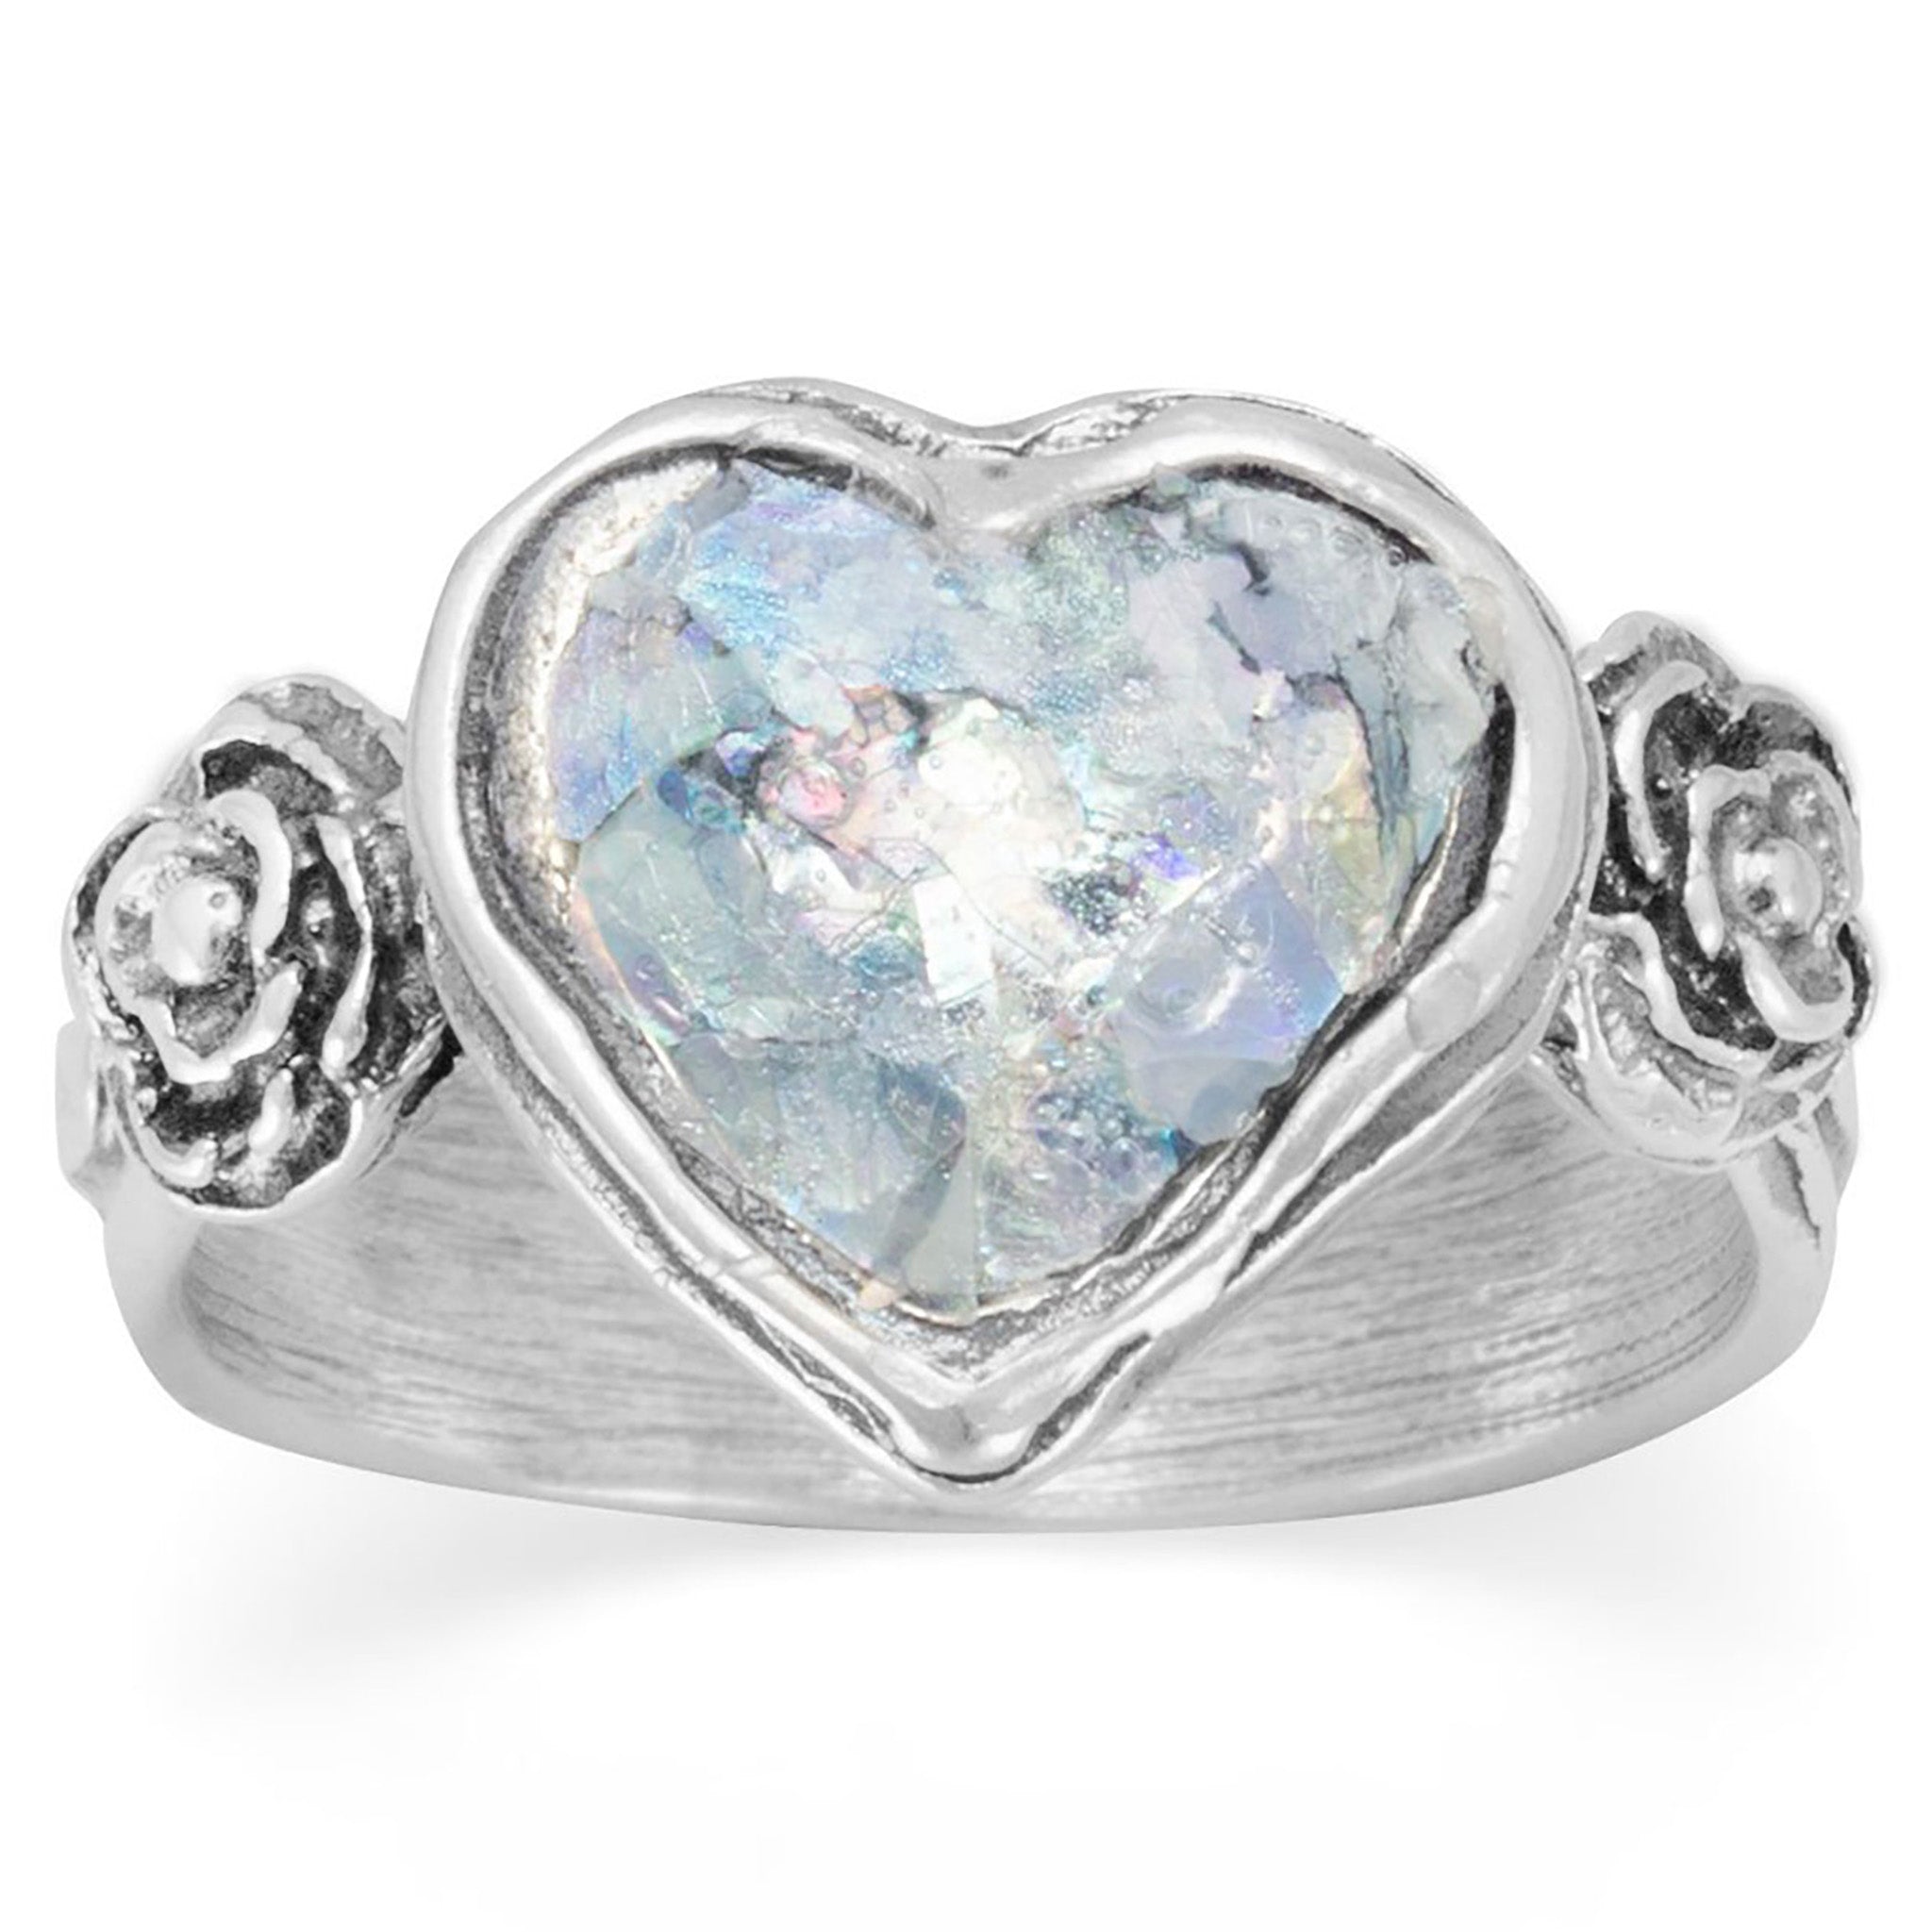 Ancient Roman Glass Heart Ring